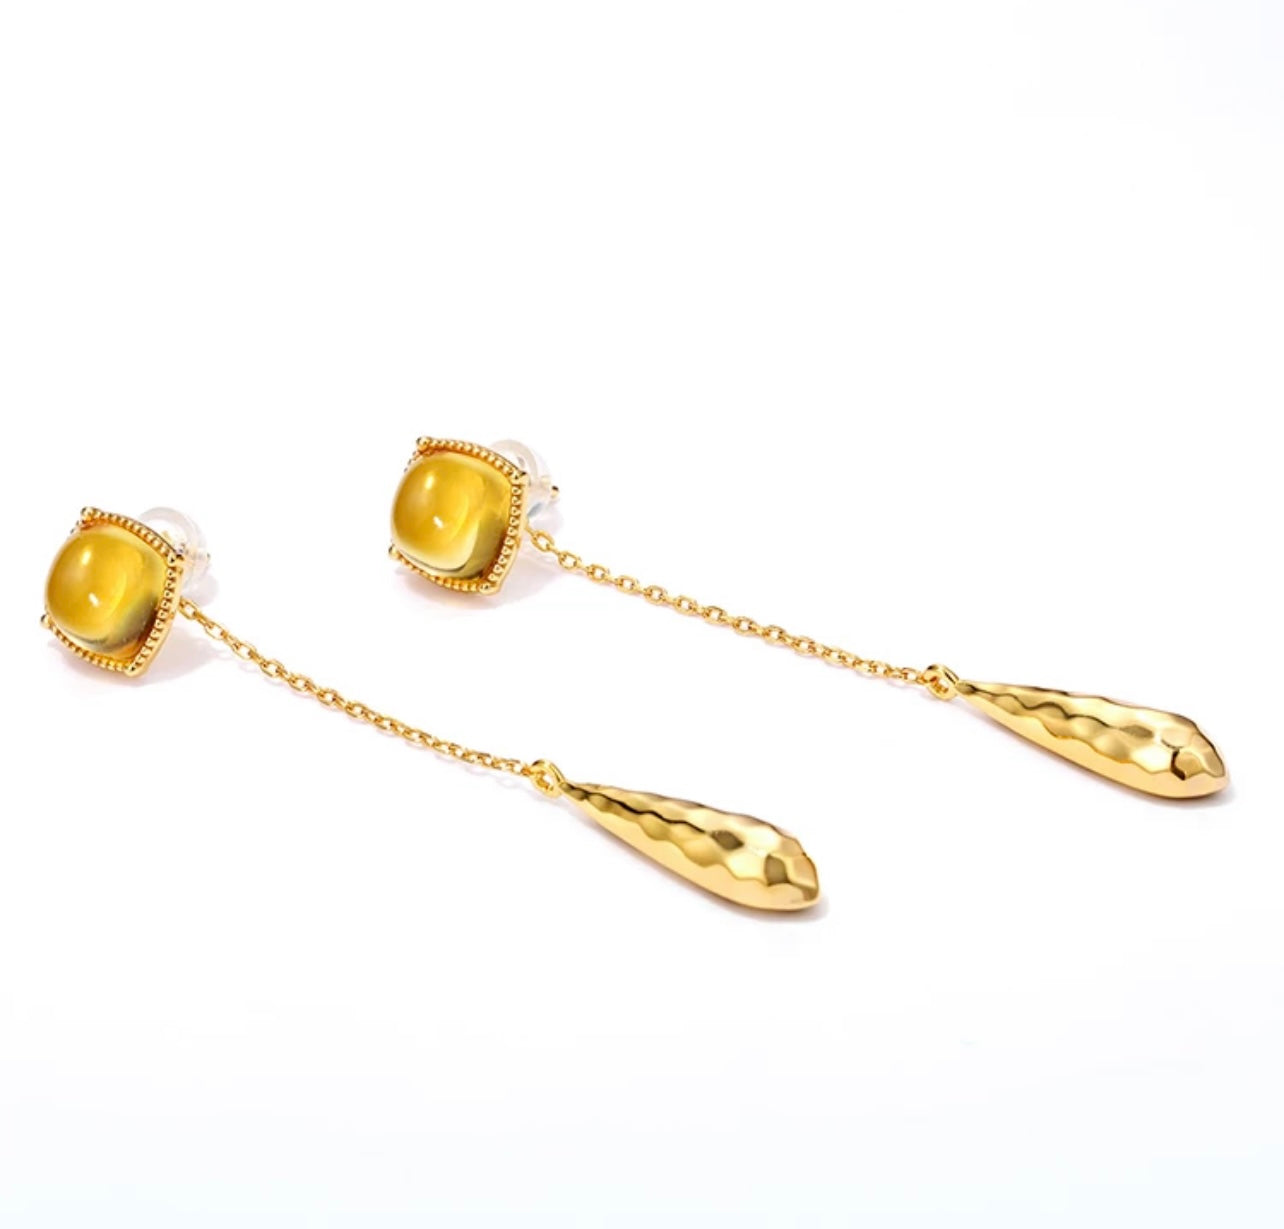 Gold Citrine drop earrings